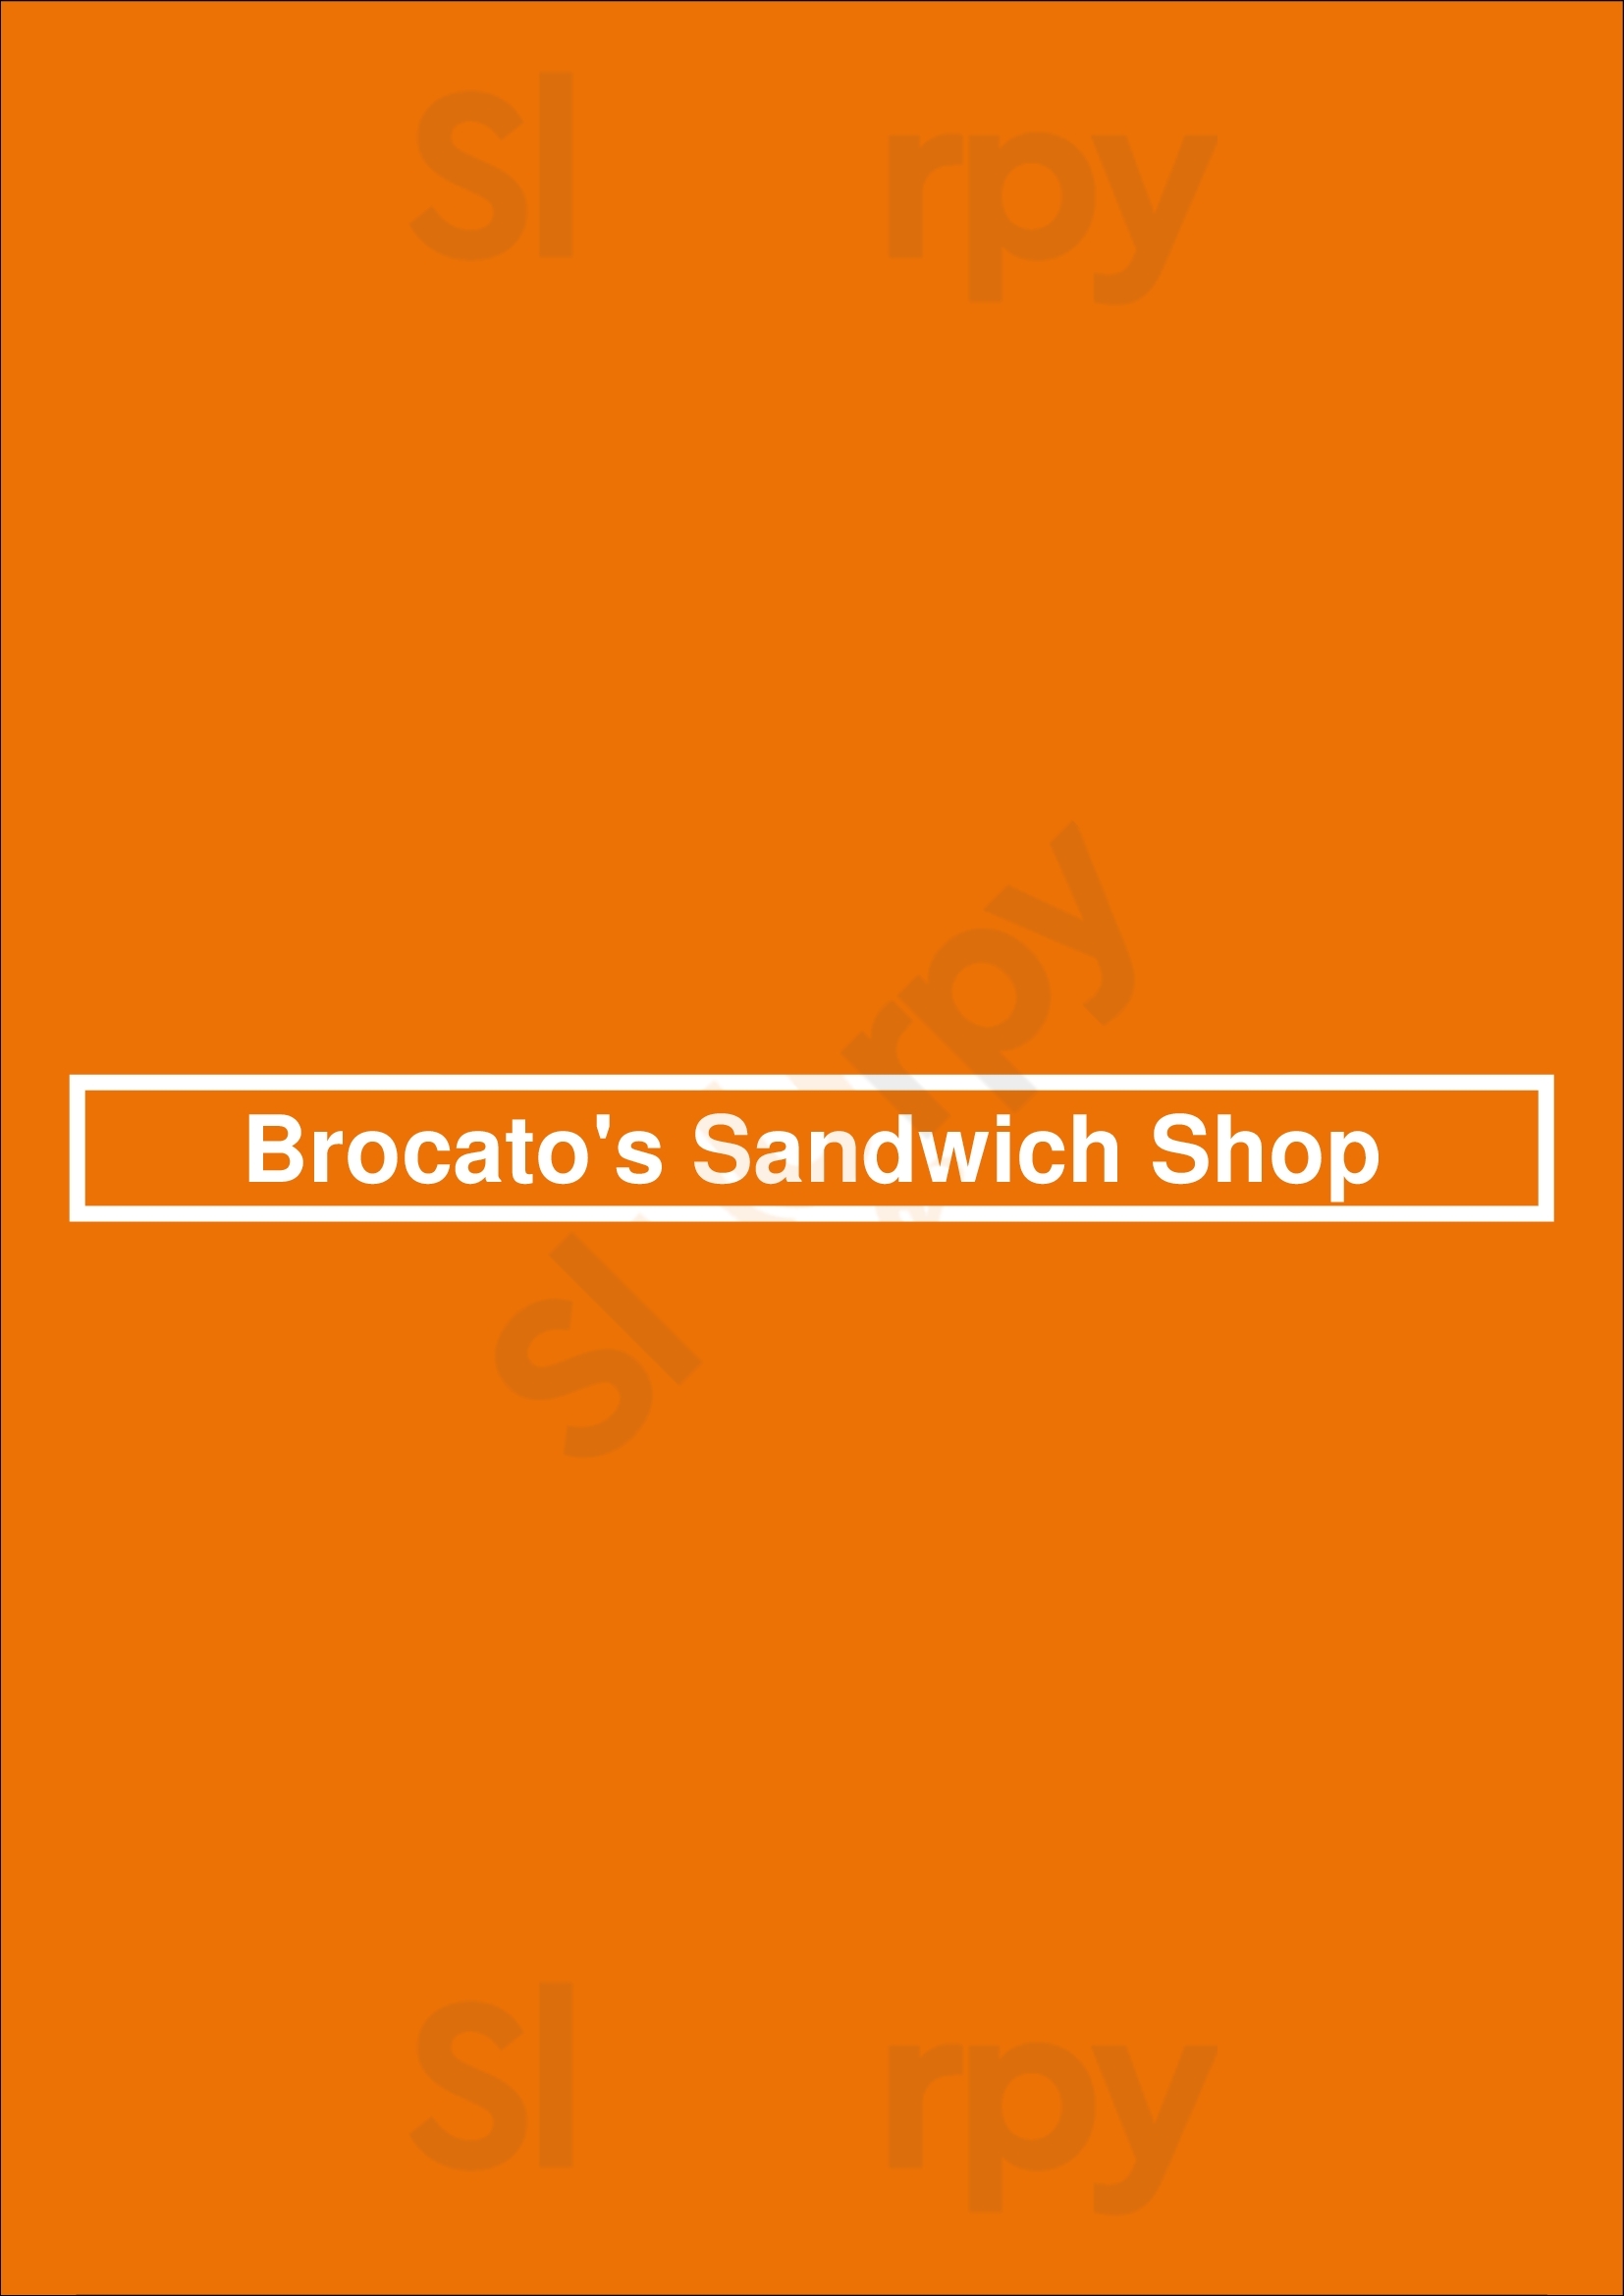 Brocato's Sandwich Shop Tampa Menu - 1